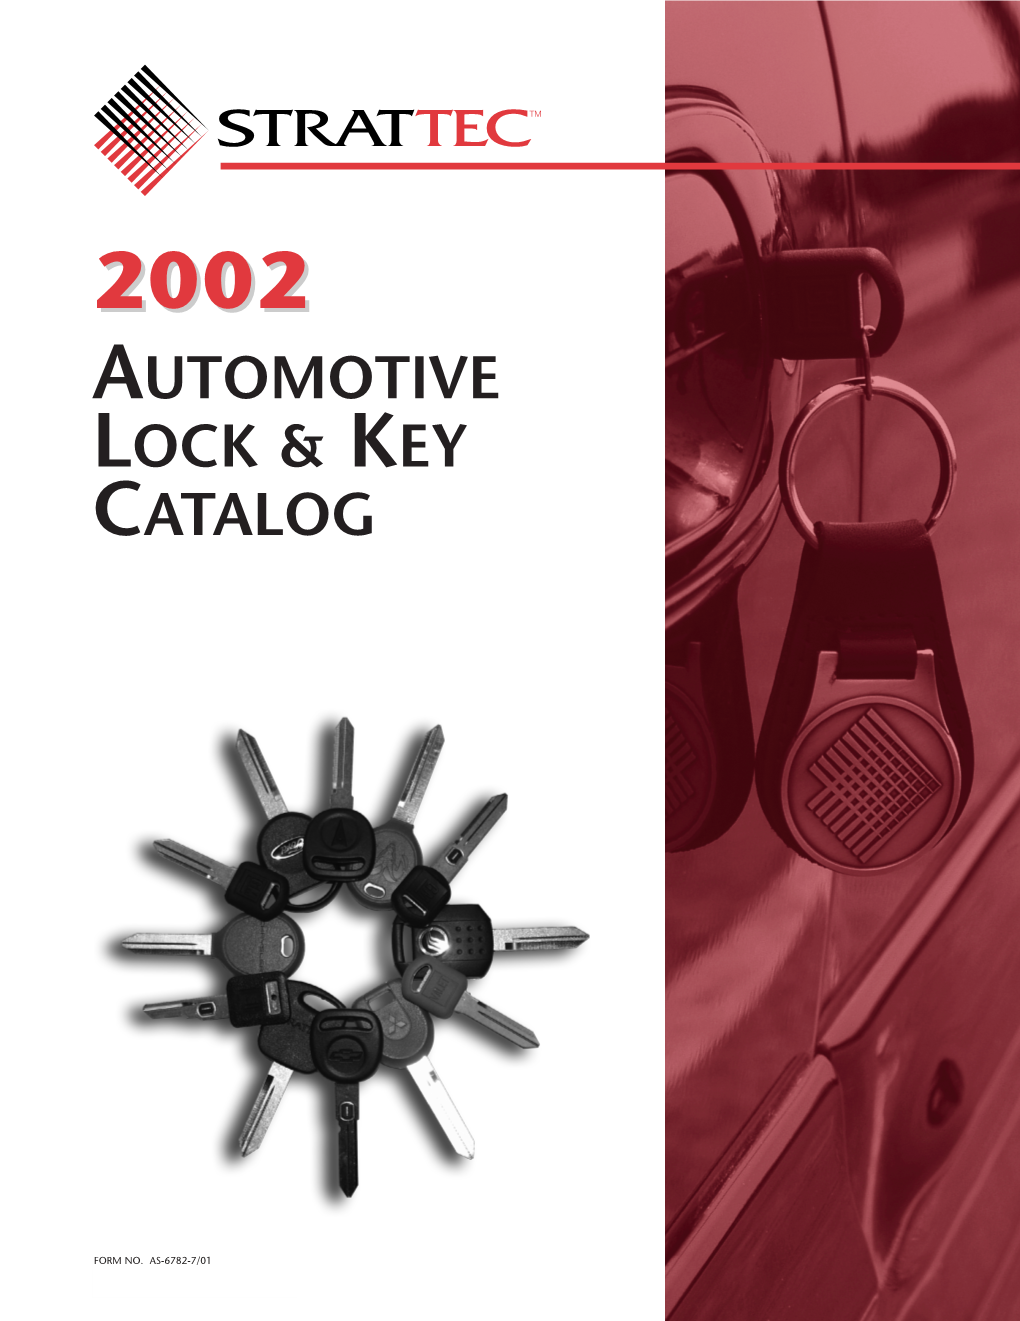 20022002 Automotive Lock & Key Catalog